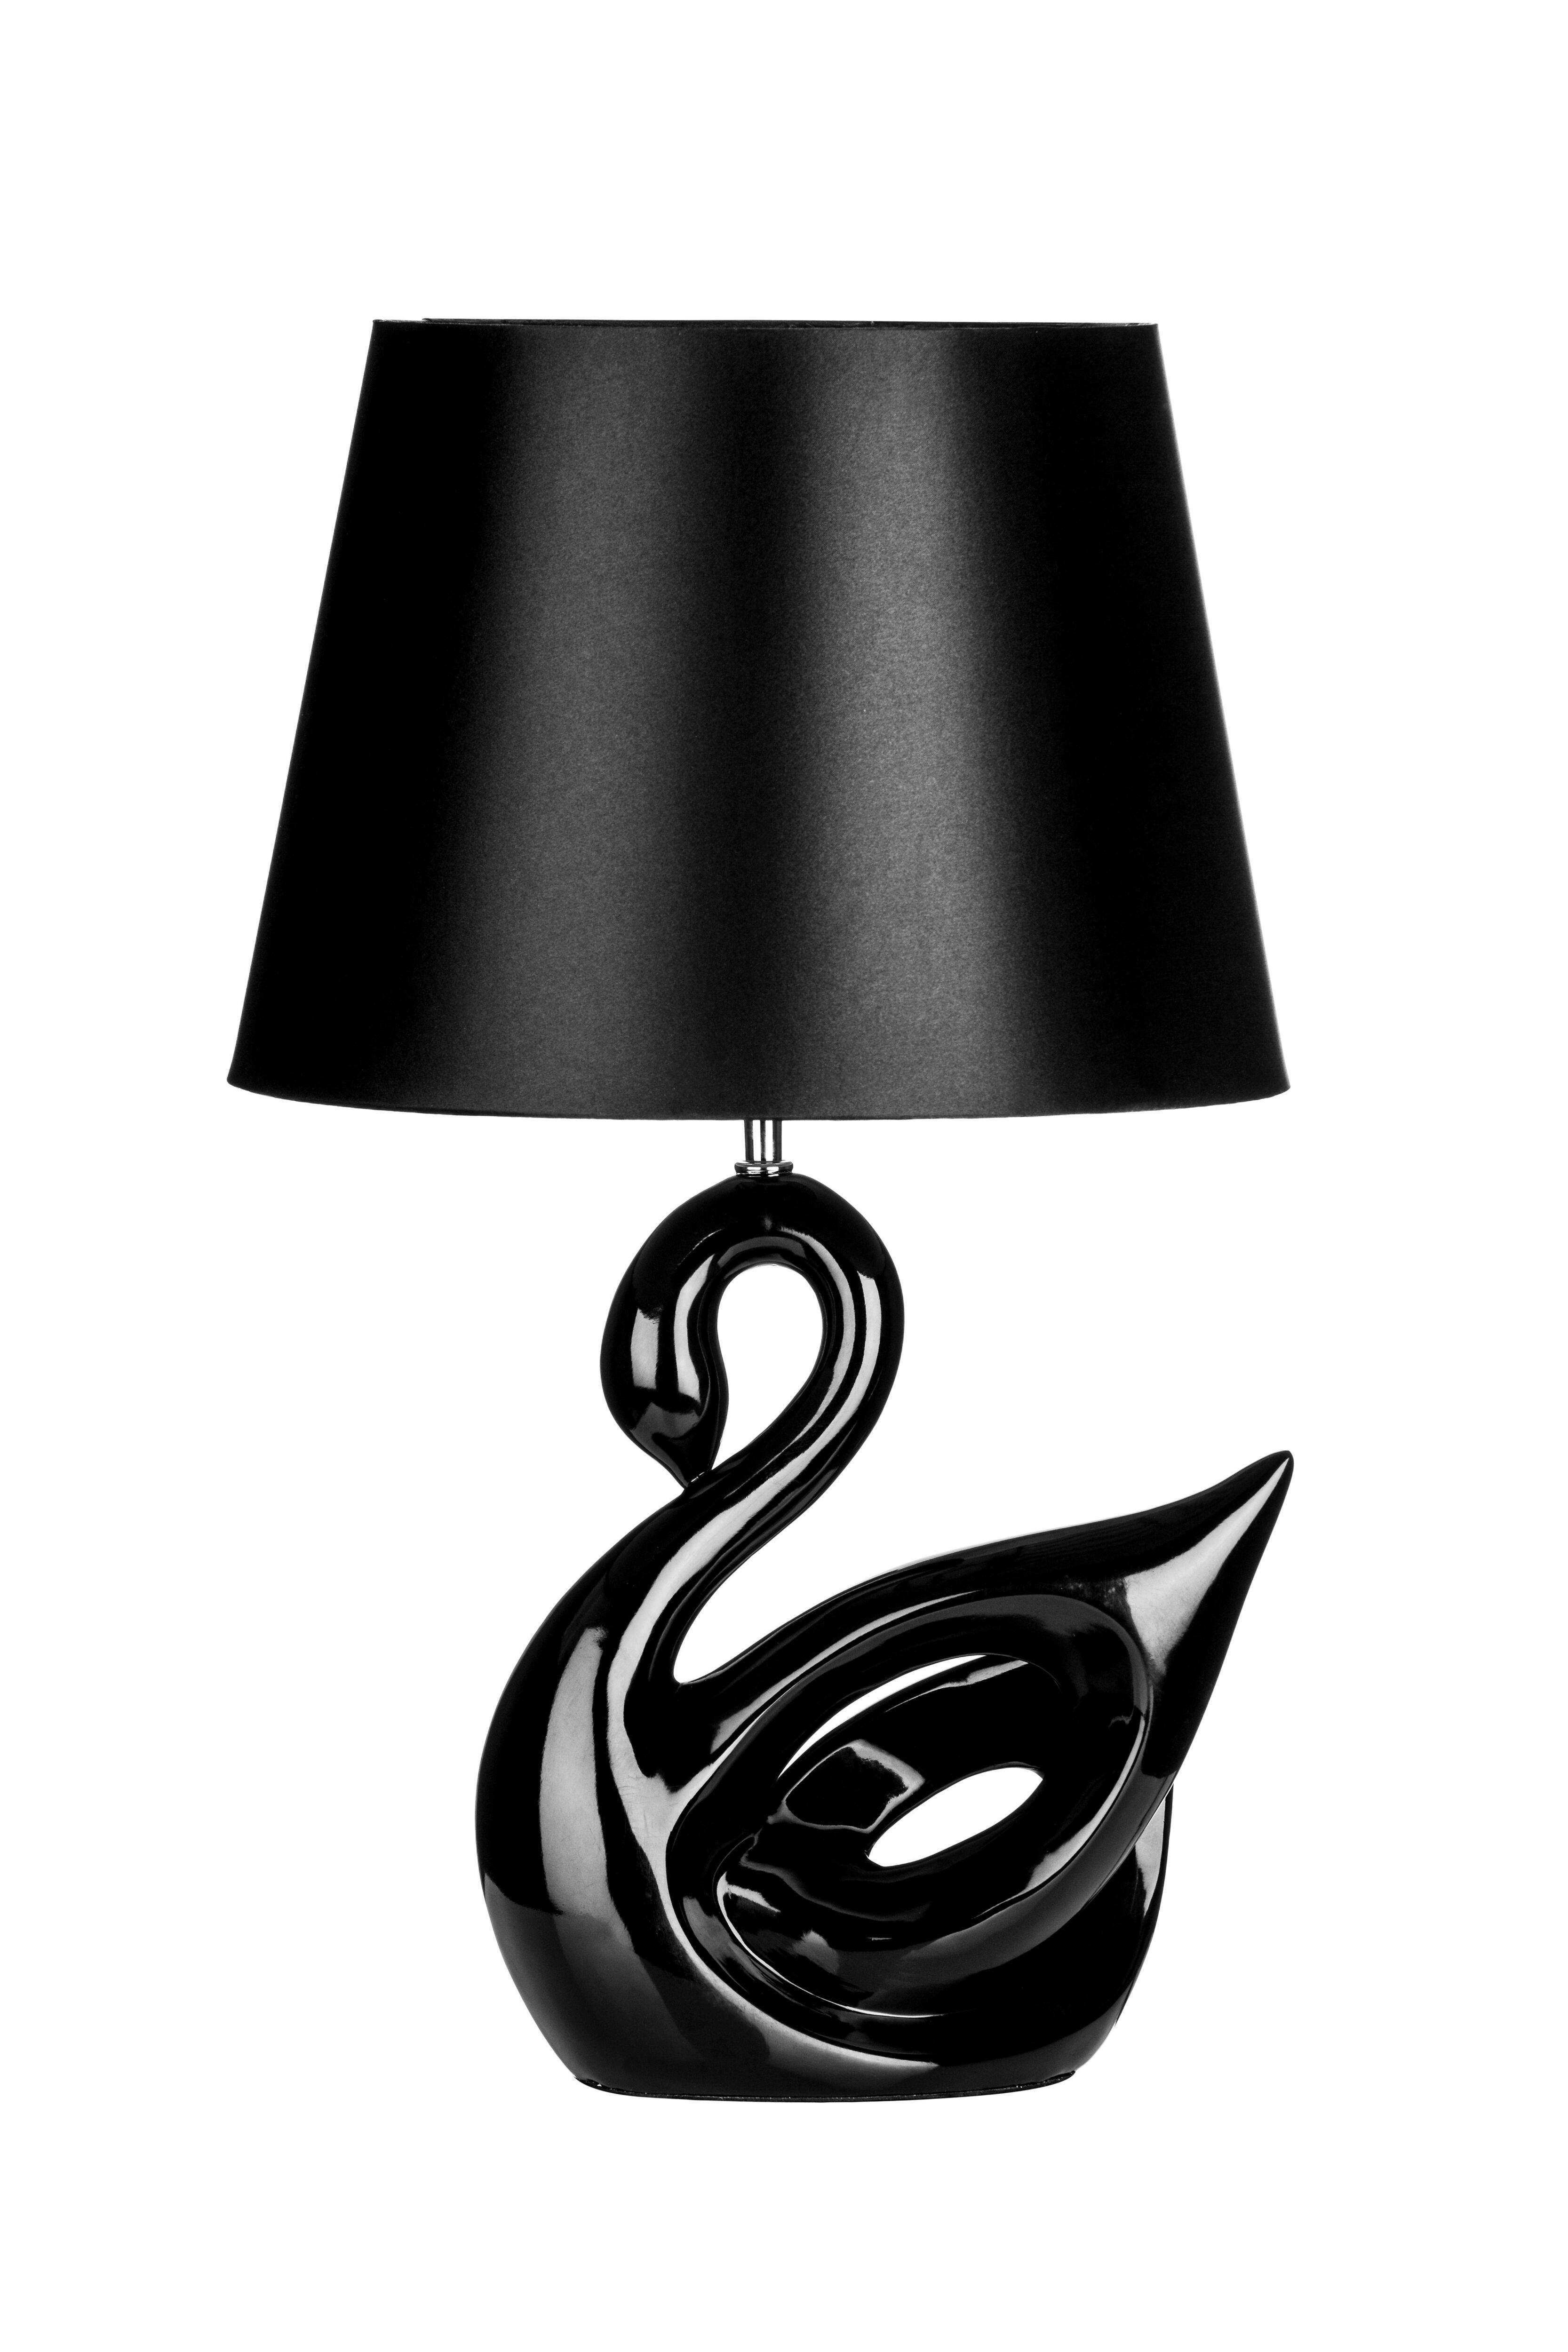 Interiors by Premier Swan Black Polyresin Table Lamp